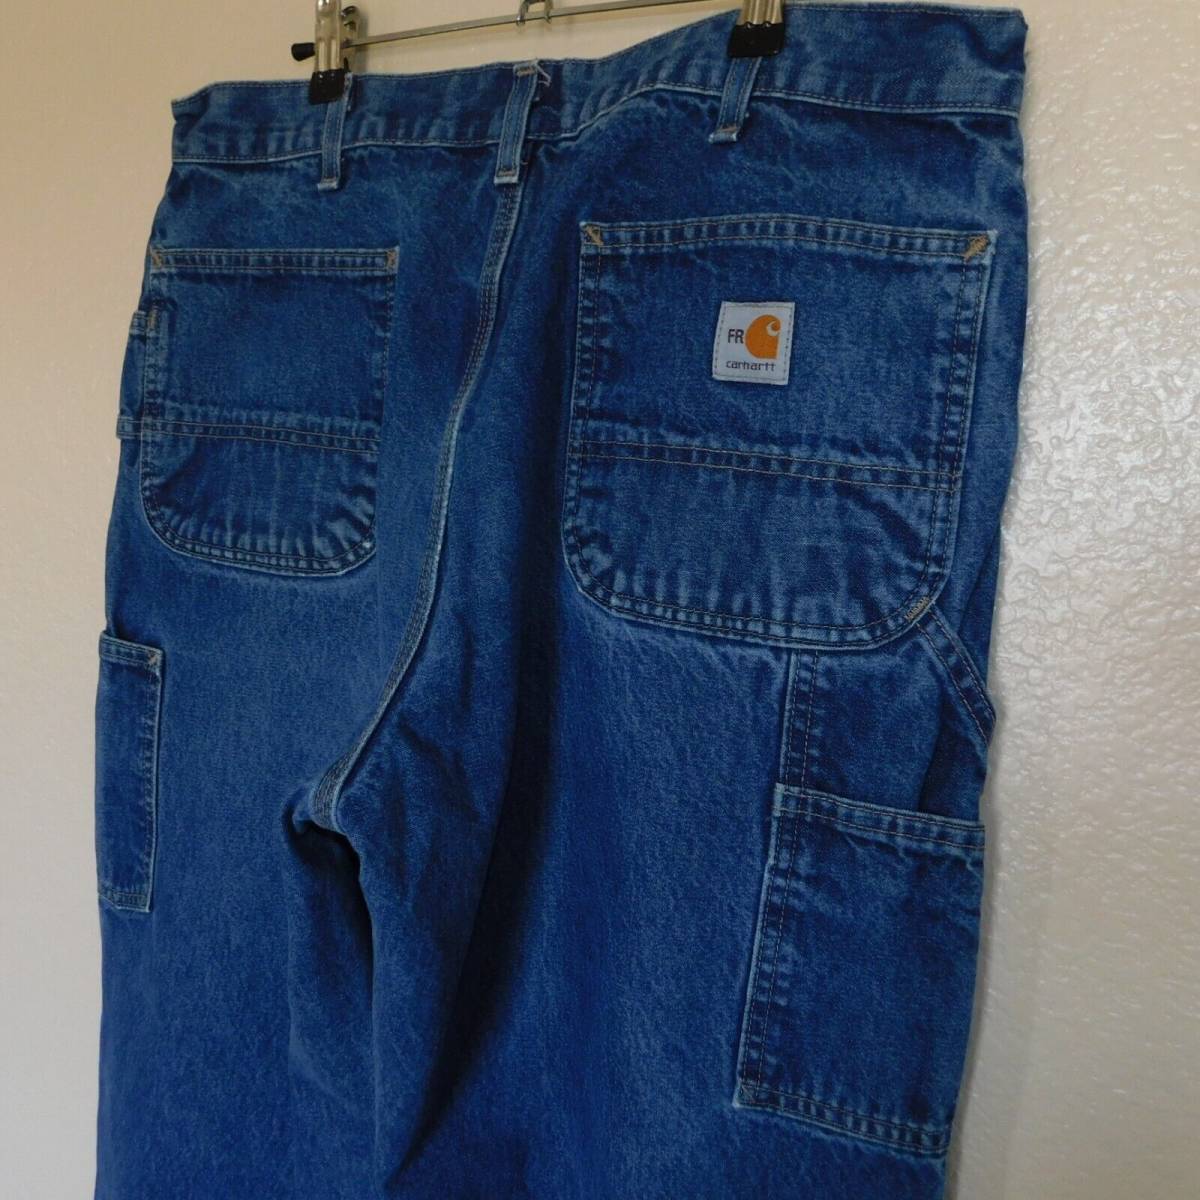 Carhartt FR NFPA 2112 Workwear Pants Pocket Denim FRB 13 Blue Jeans Size 36x32 海外 即決 7